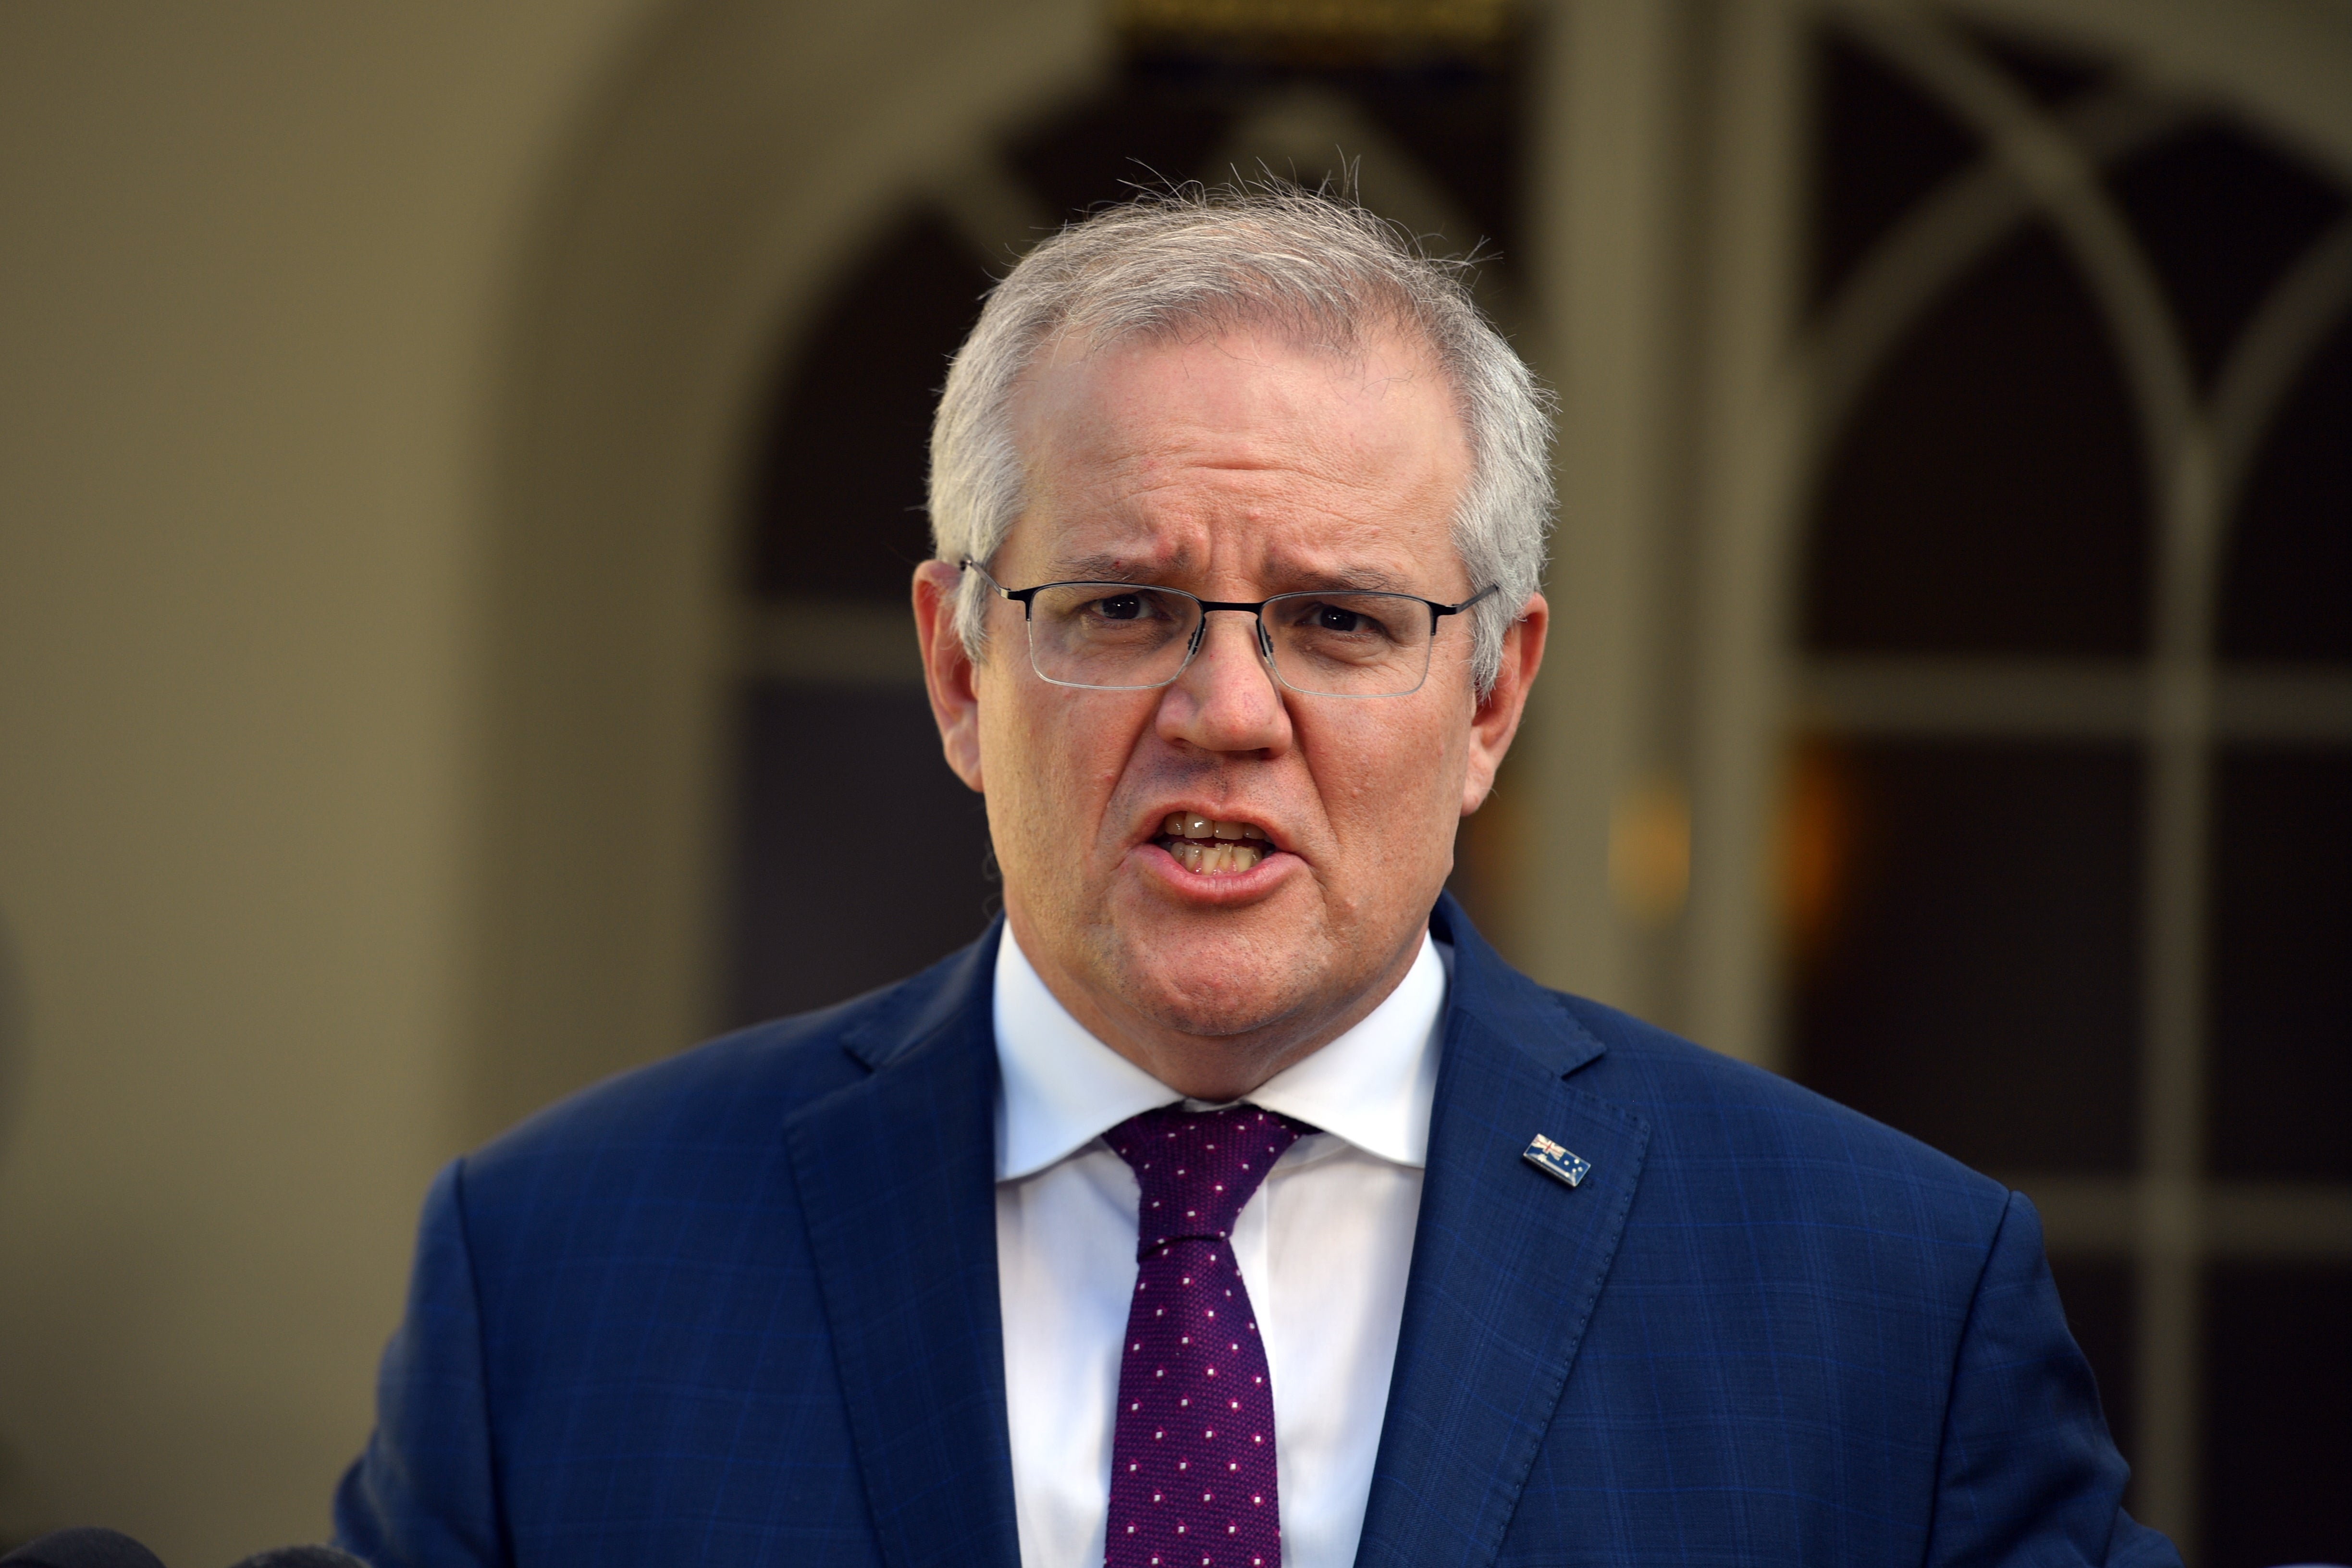 File: Australian Prime Minister Scott Morrison holds a press conference at Kirribilli House in Sydney, Australia on 15 July 2021